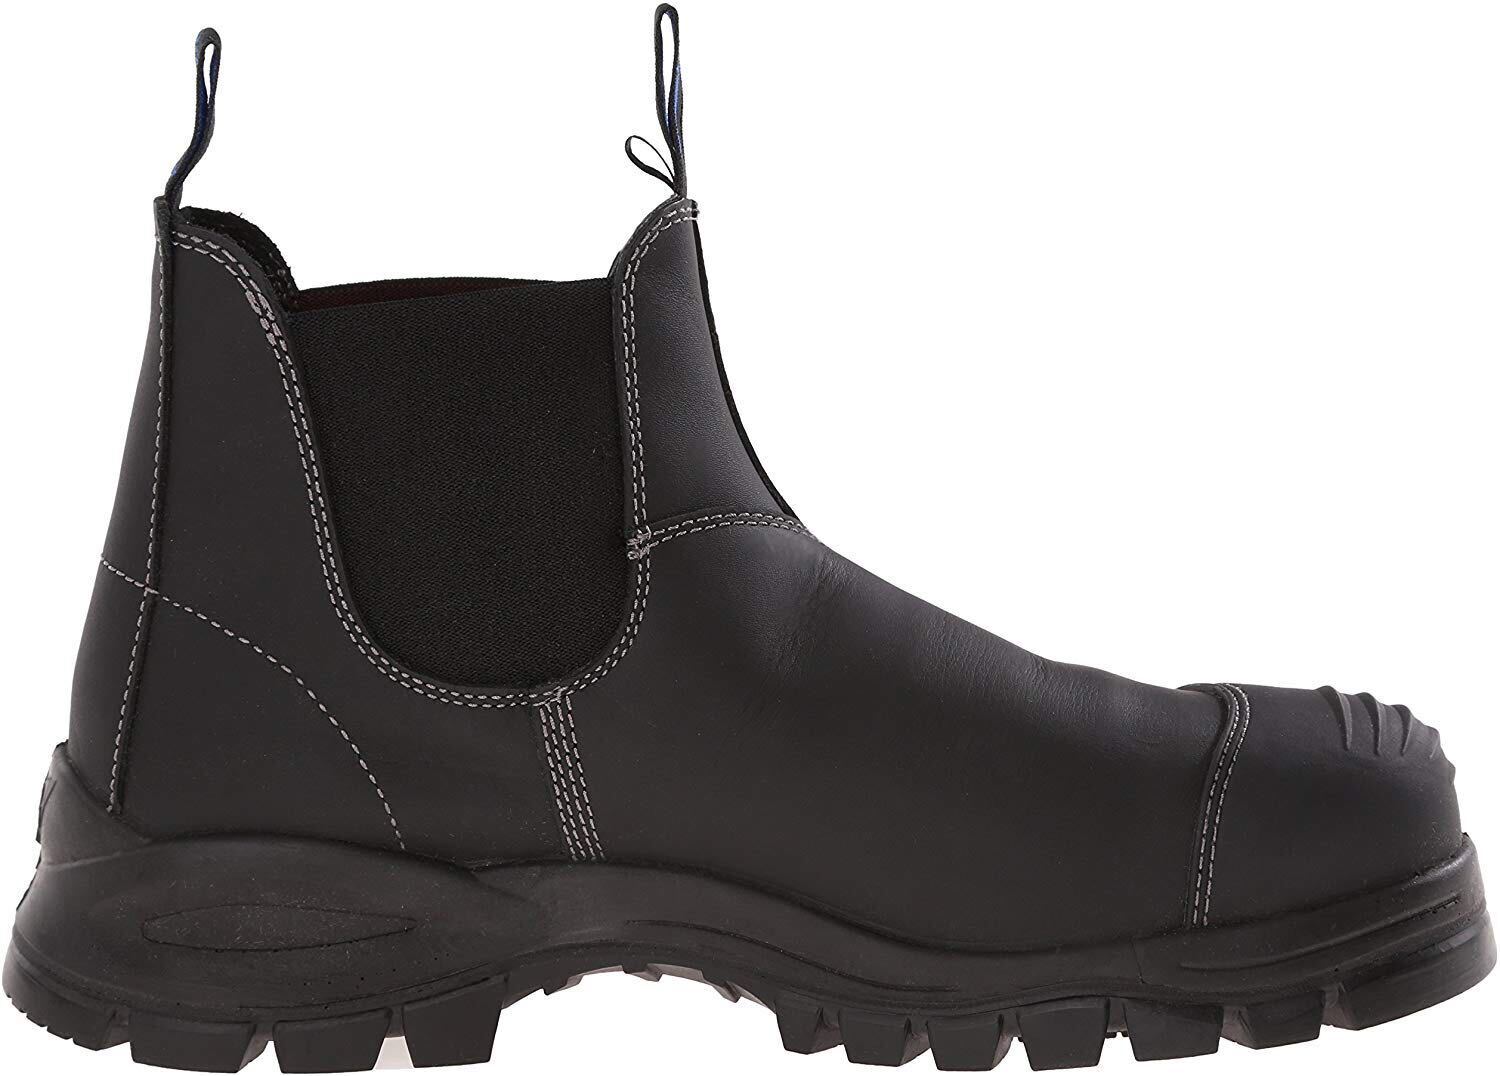 Best Blundstone 990 Black Elastic Sided Safety boots at workwear corner